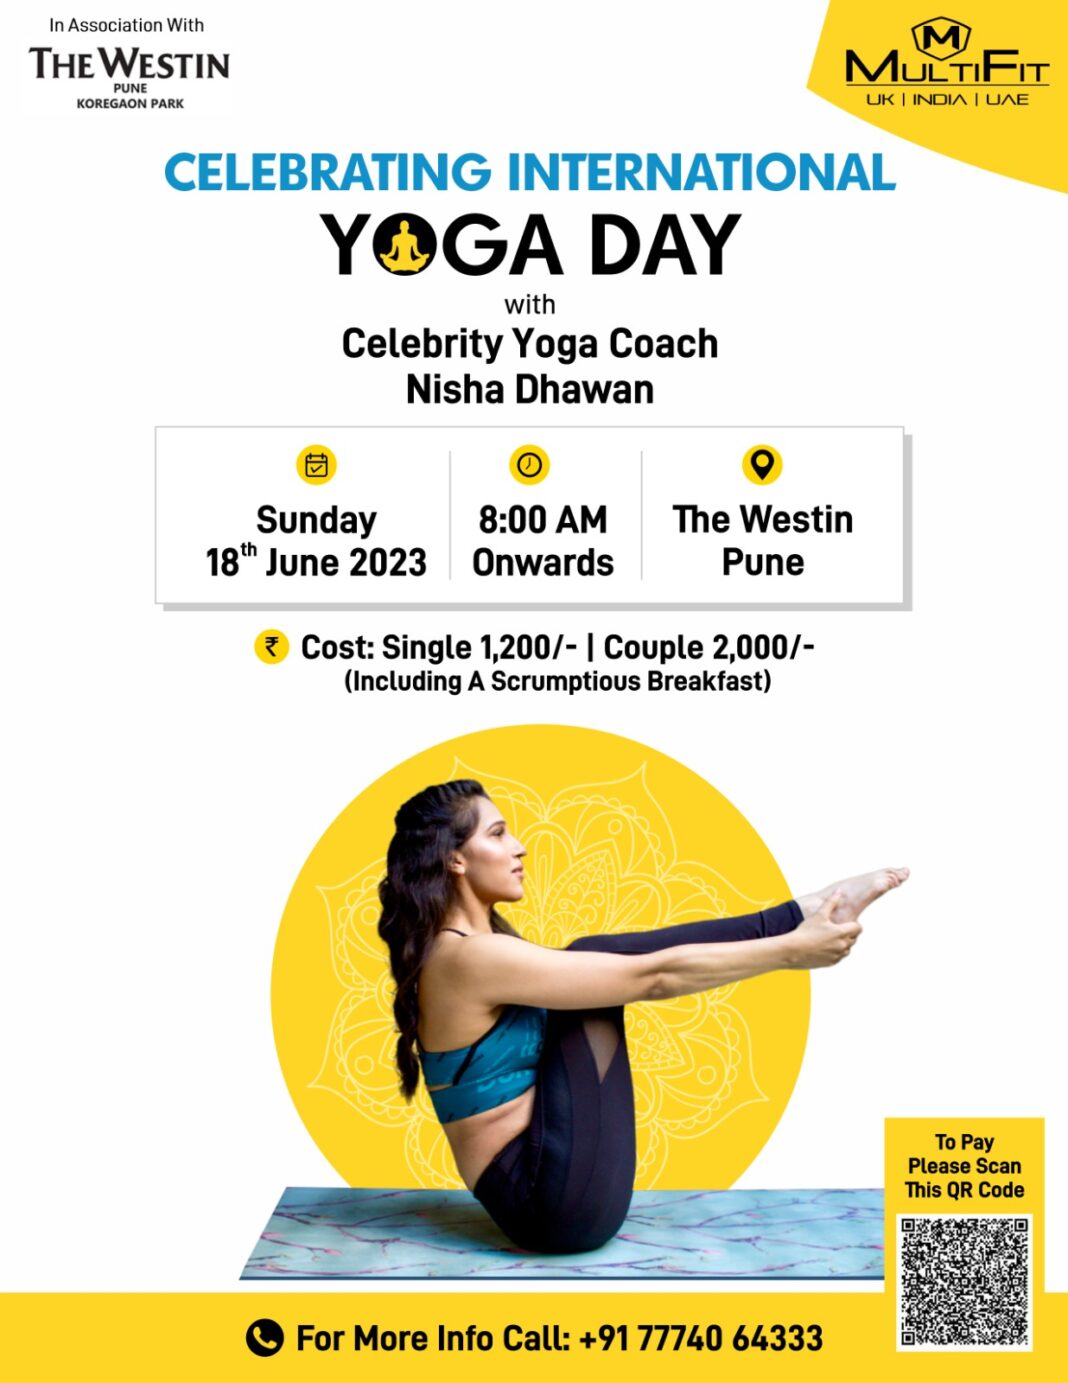 MultiFit announces Inspiring International Yoga Day Celebration with Celebrity Yoga Coach Nisha Dhawan